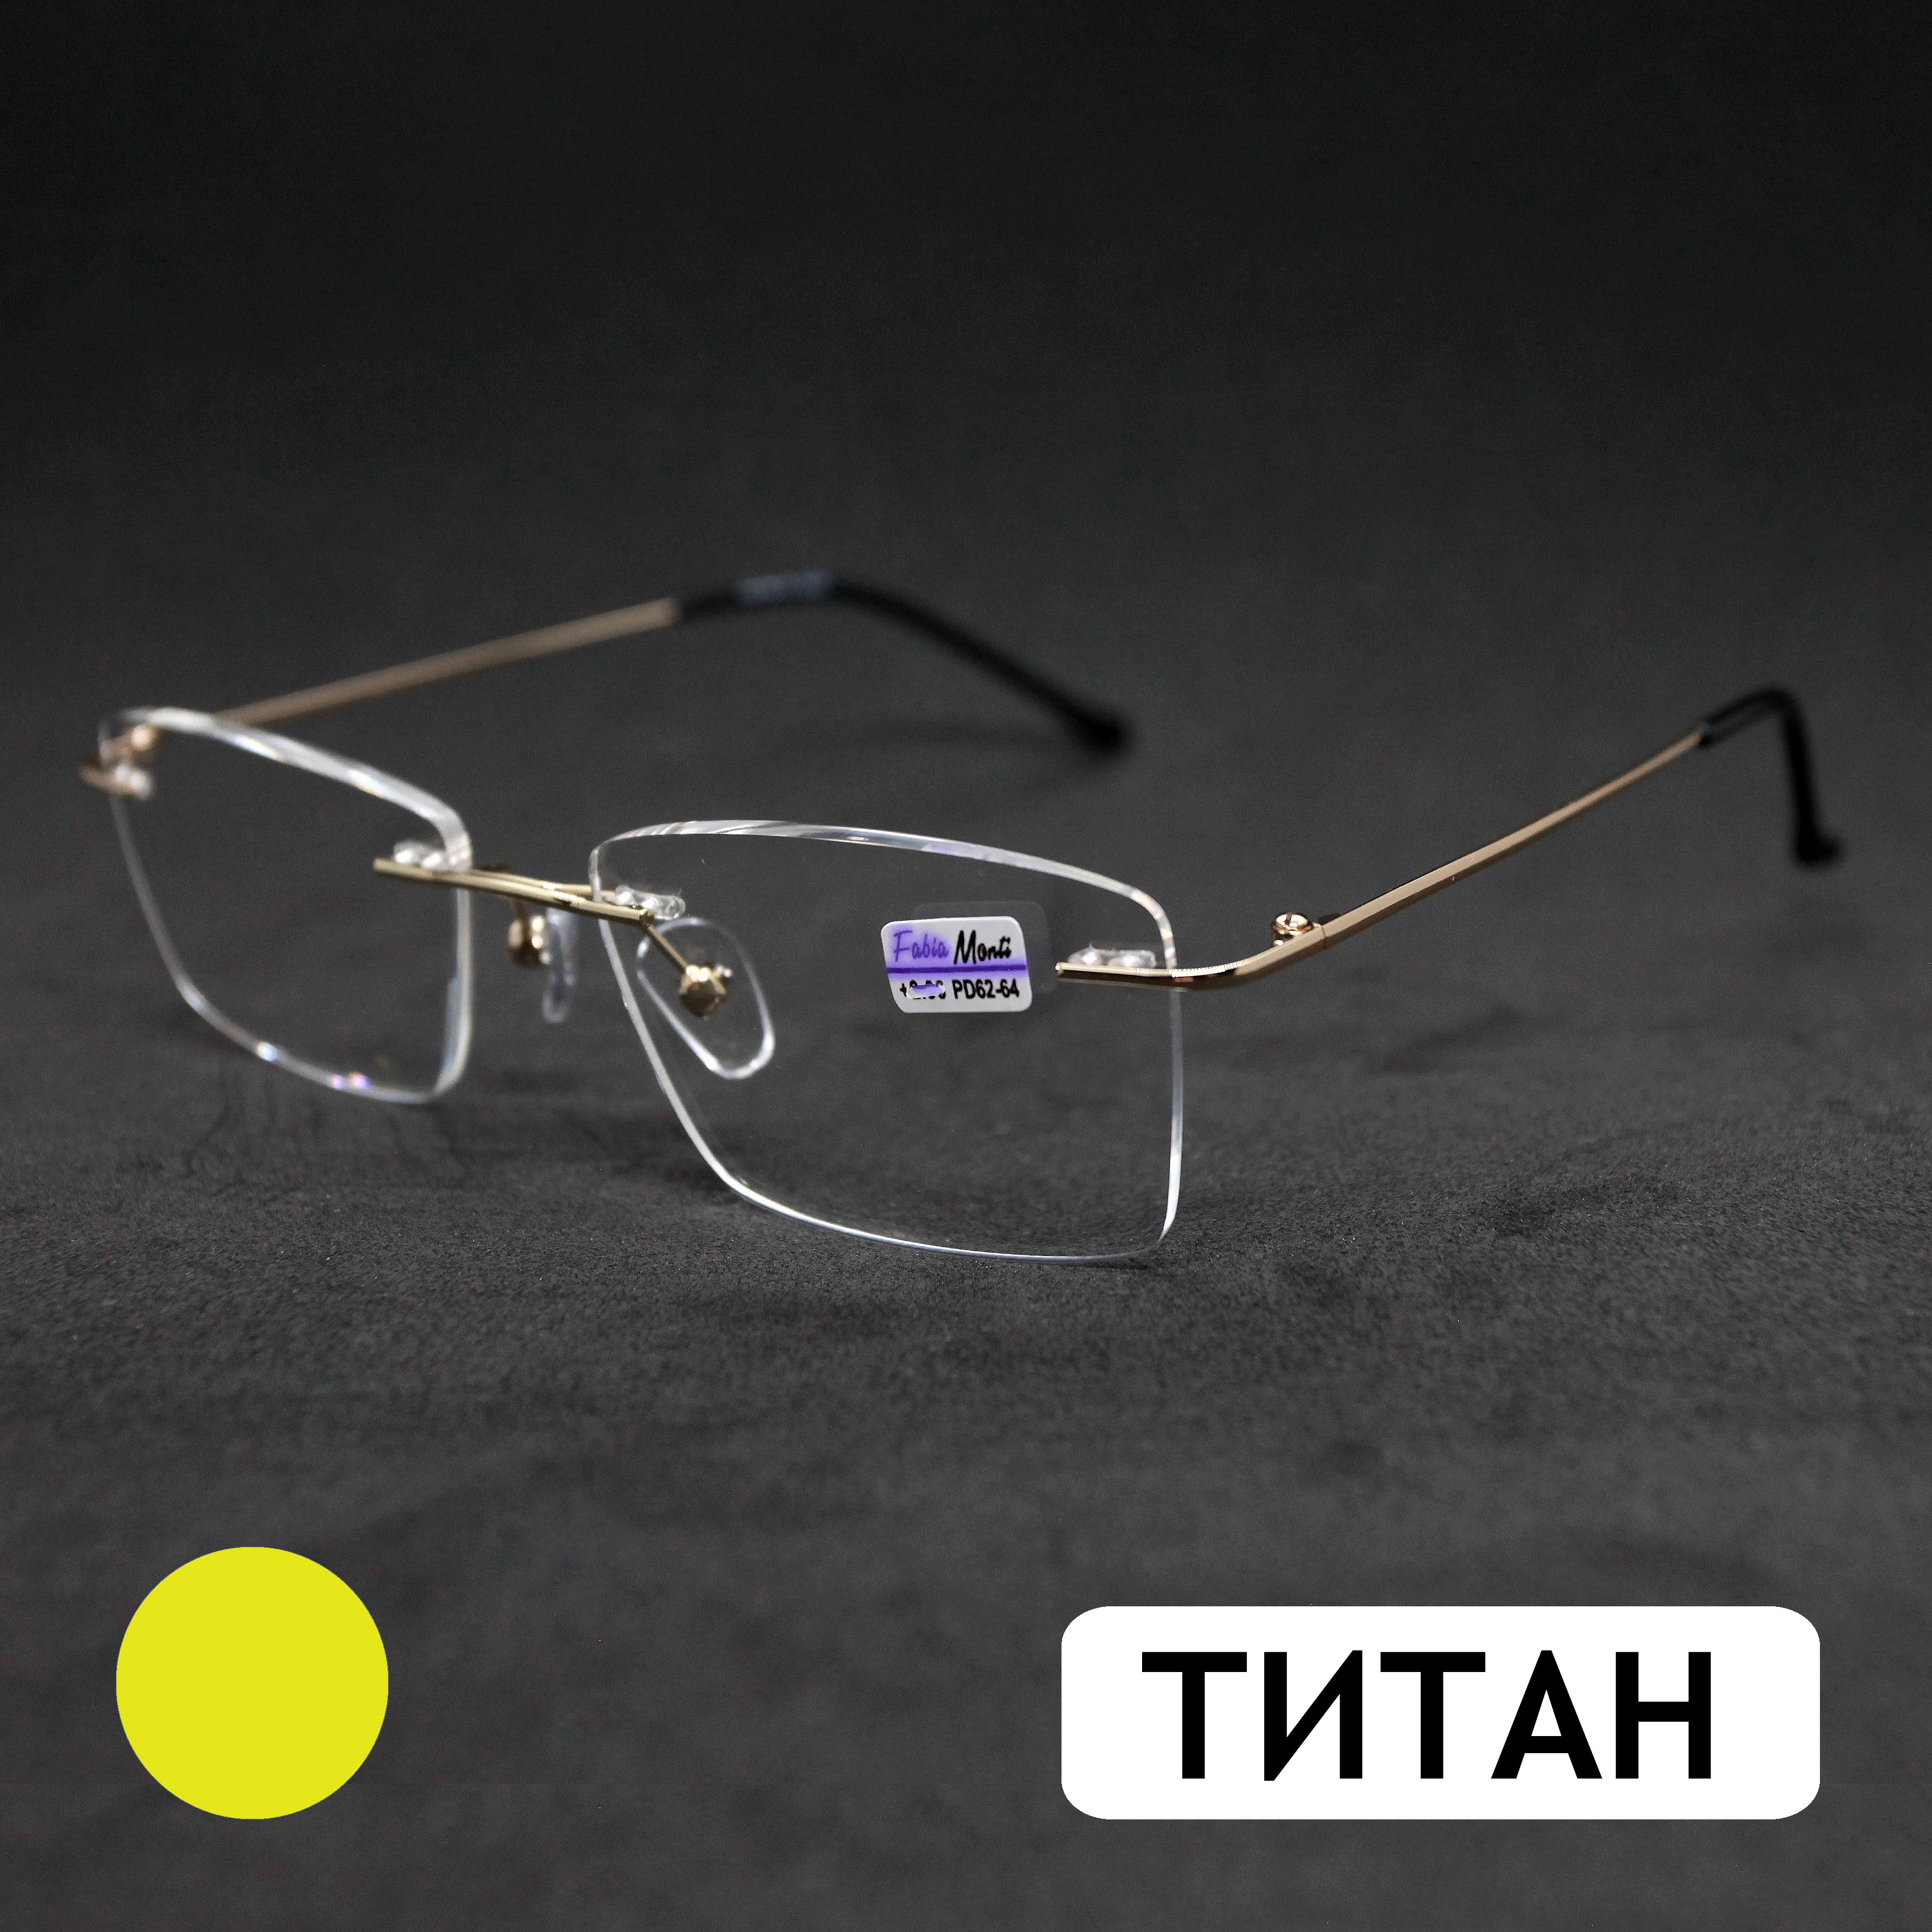 Безободковые очки FM 8959 -1.75, без футляра, оправа титан, золотые, РЦ 62-64